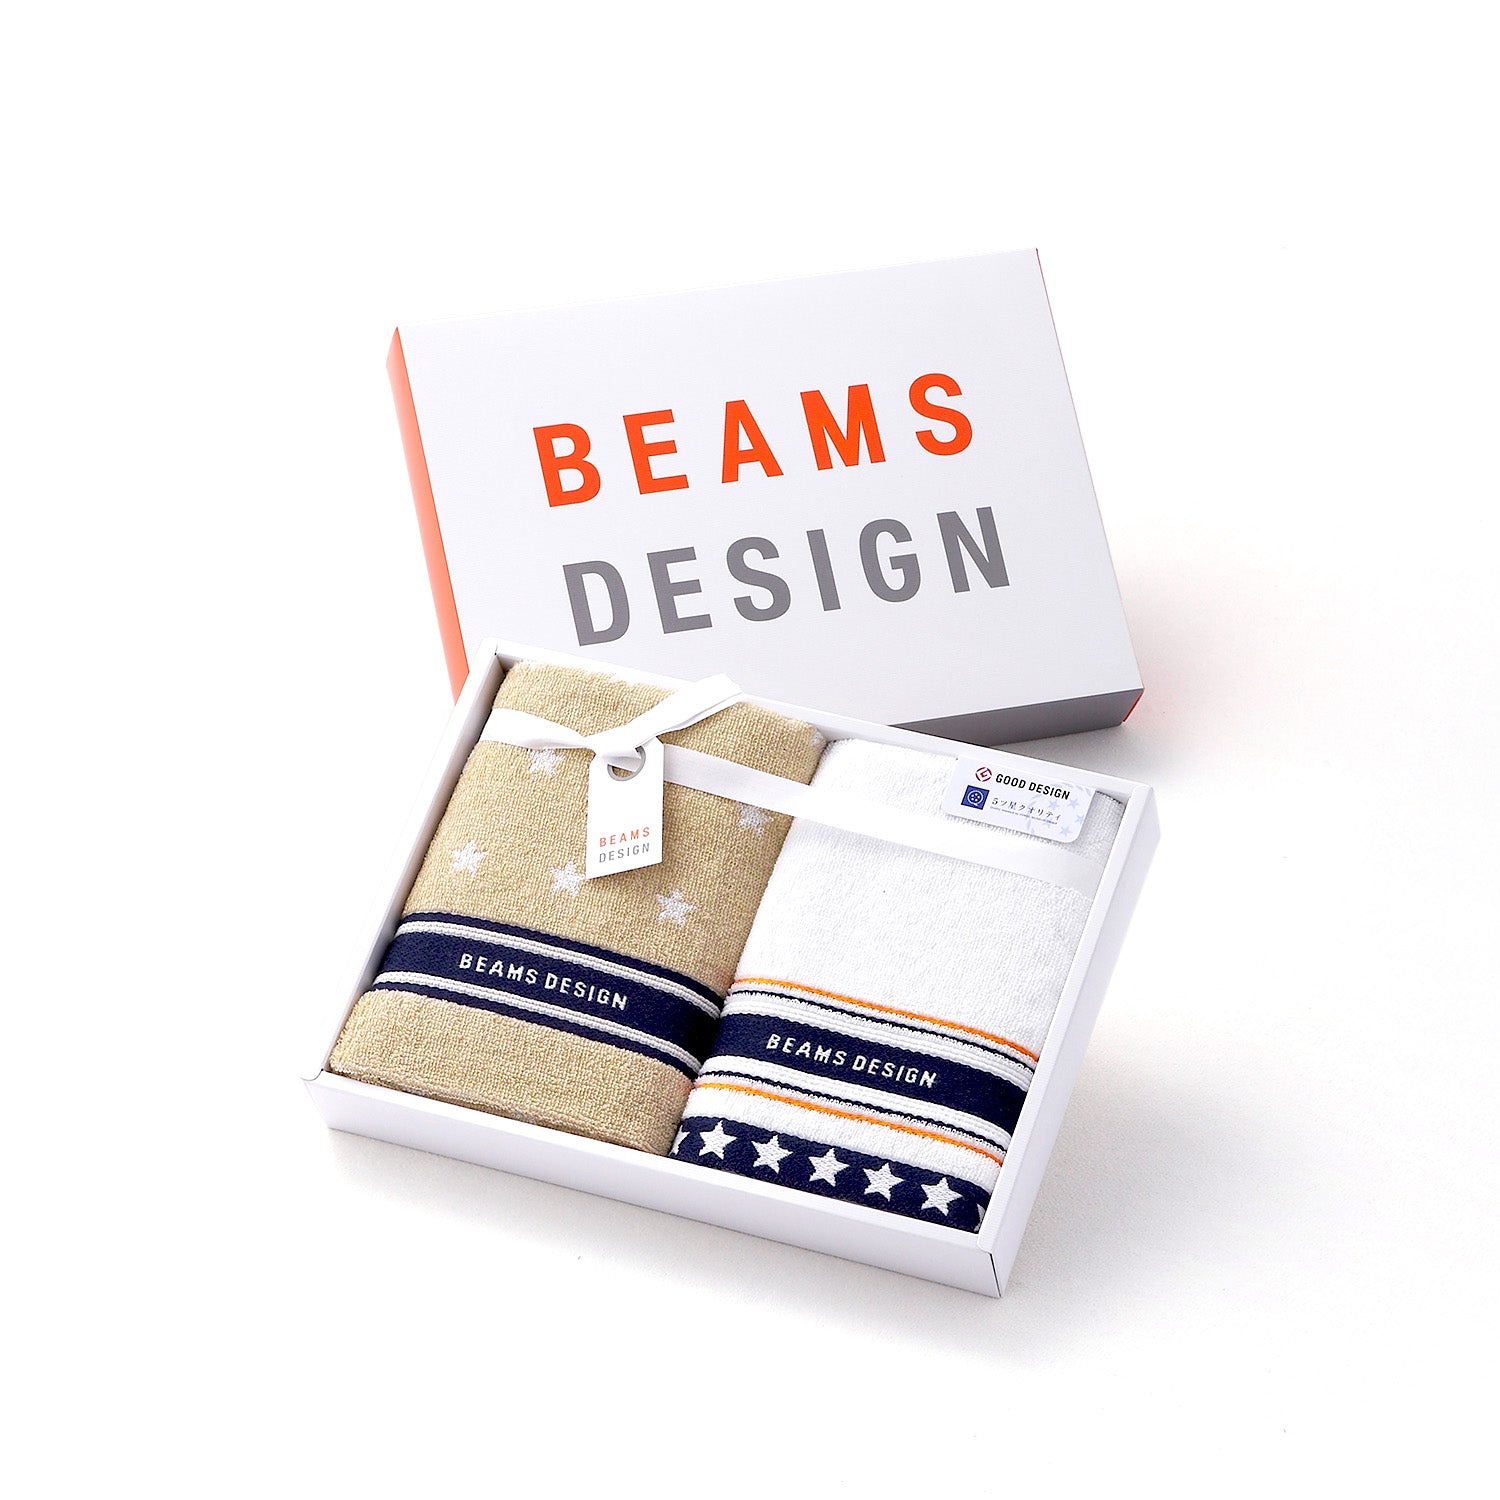 BEAMS DESIGN』 NEW STAR GIFT (フェイスタオル2P) – タオル美術館公式